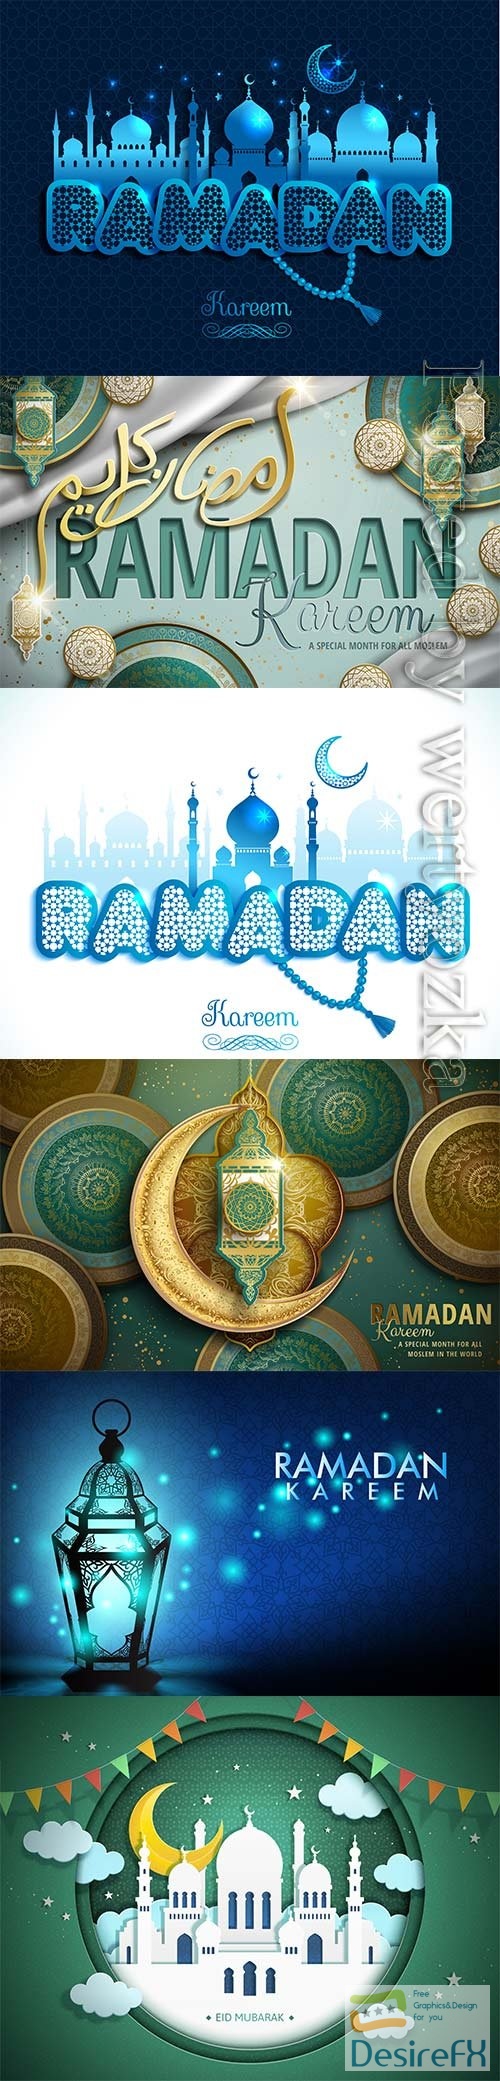 Ramadan kareem colorr vector illustration